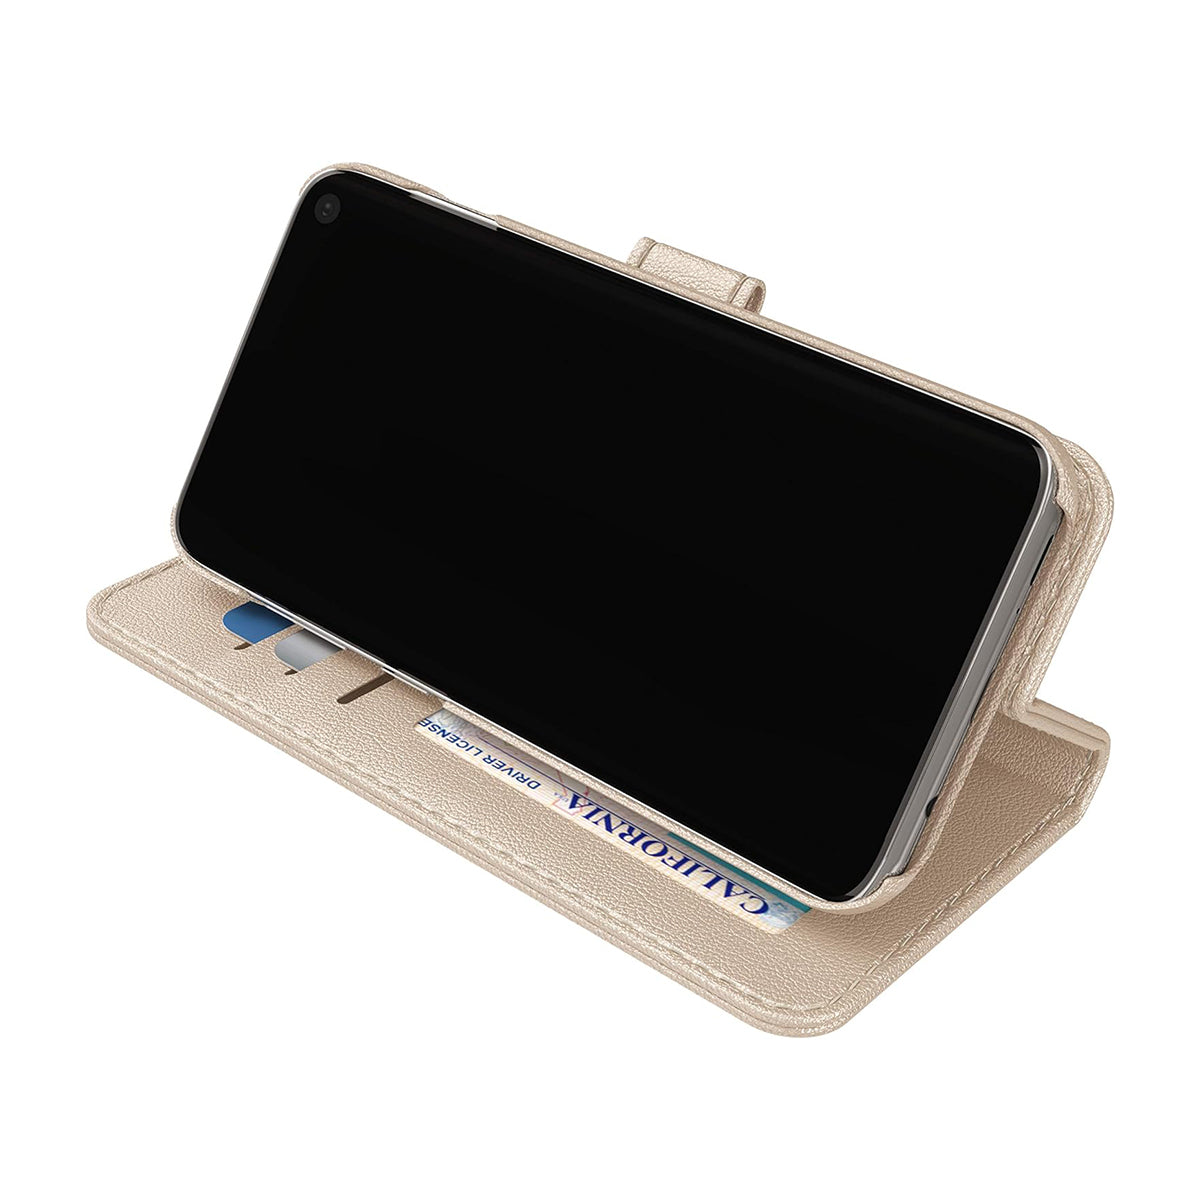 Skech Polo Book Funda protectora Wallet para Samsung Galaxy S10e - Skech Polo Book Protective Wallet Case for Samsung Galaxy S10e